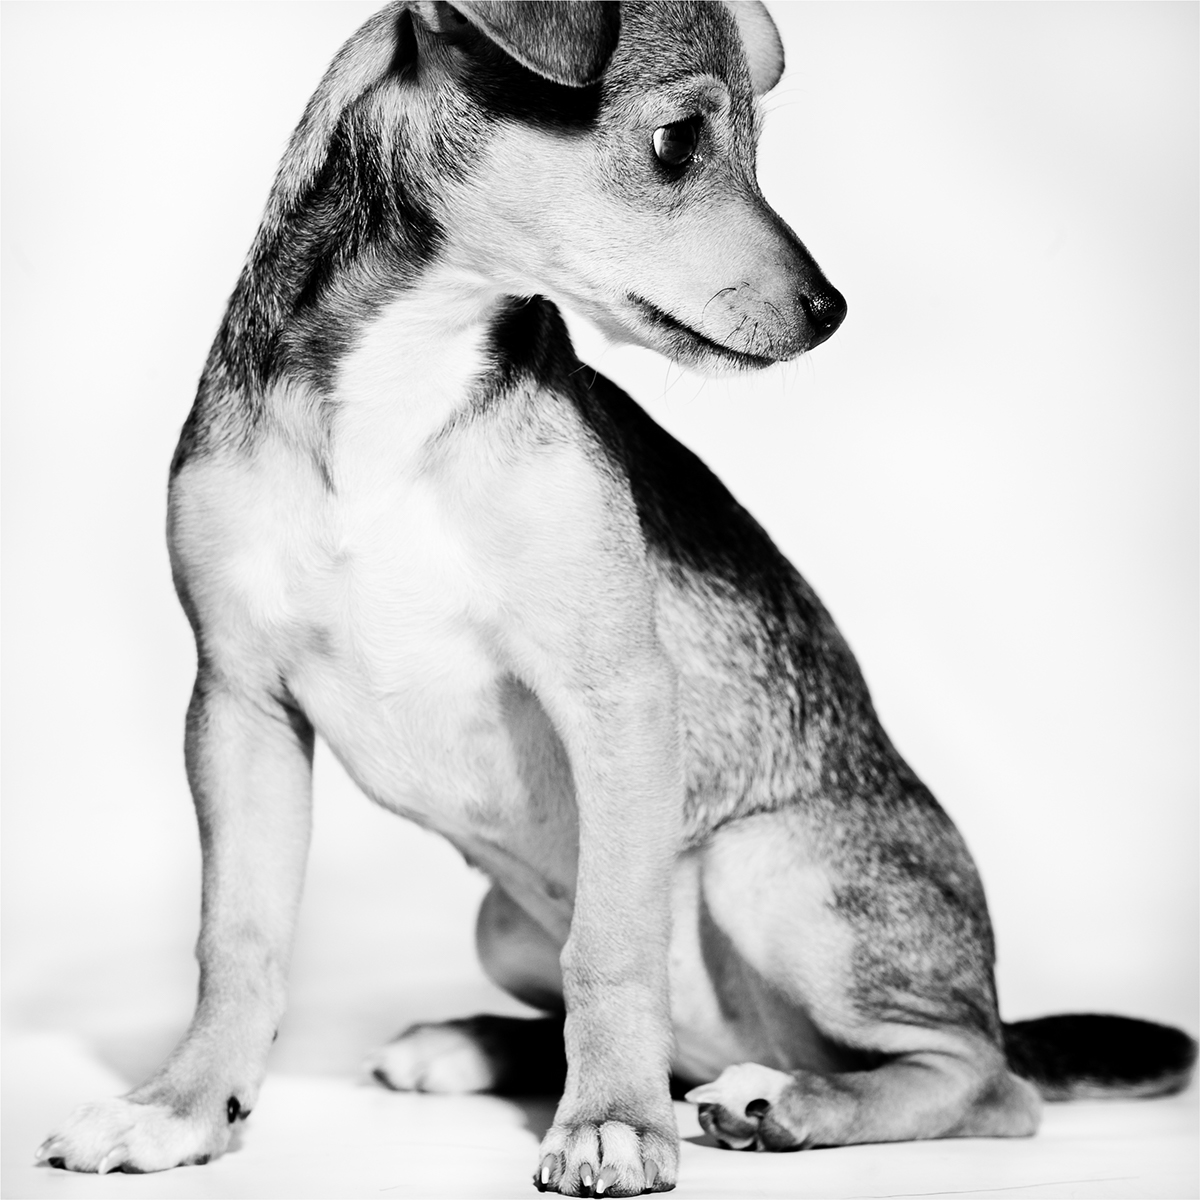 Adobe Portfolio dogs  portraits  Photography  dog photography  pet photography  animal photography  animal portraits  Puppies  Dogs dog